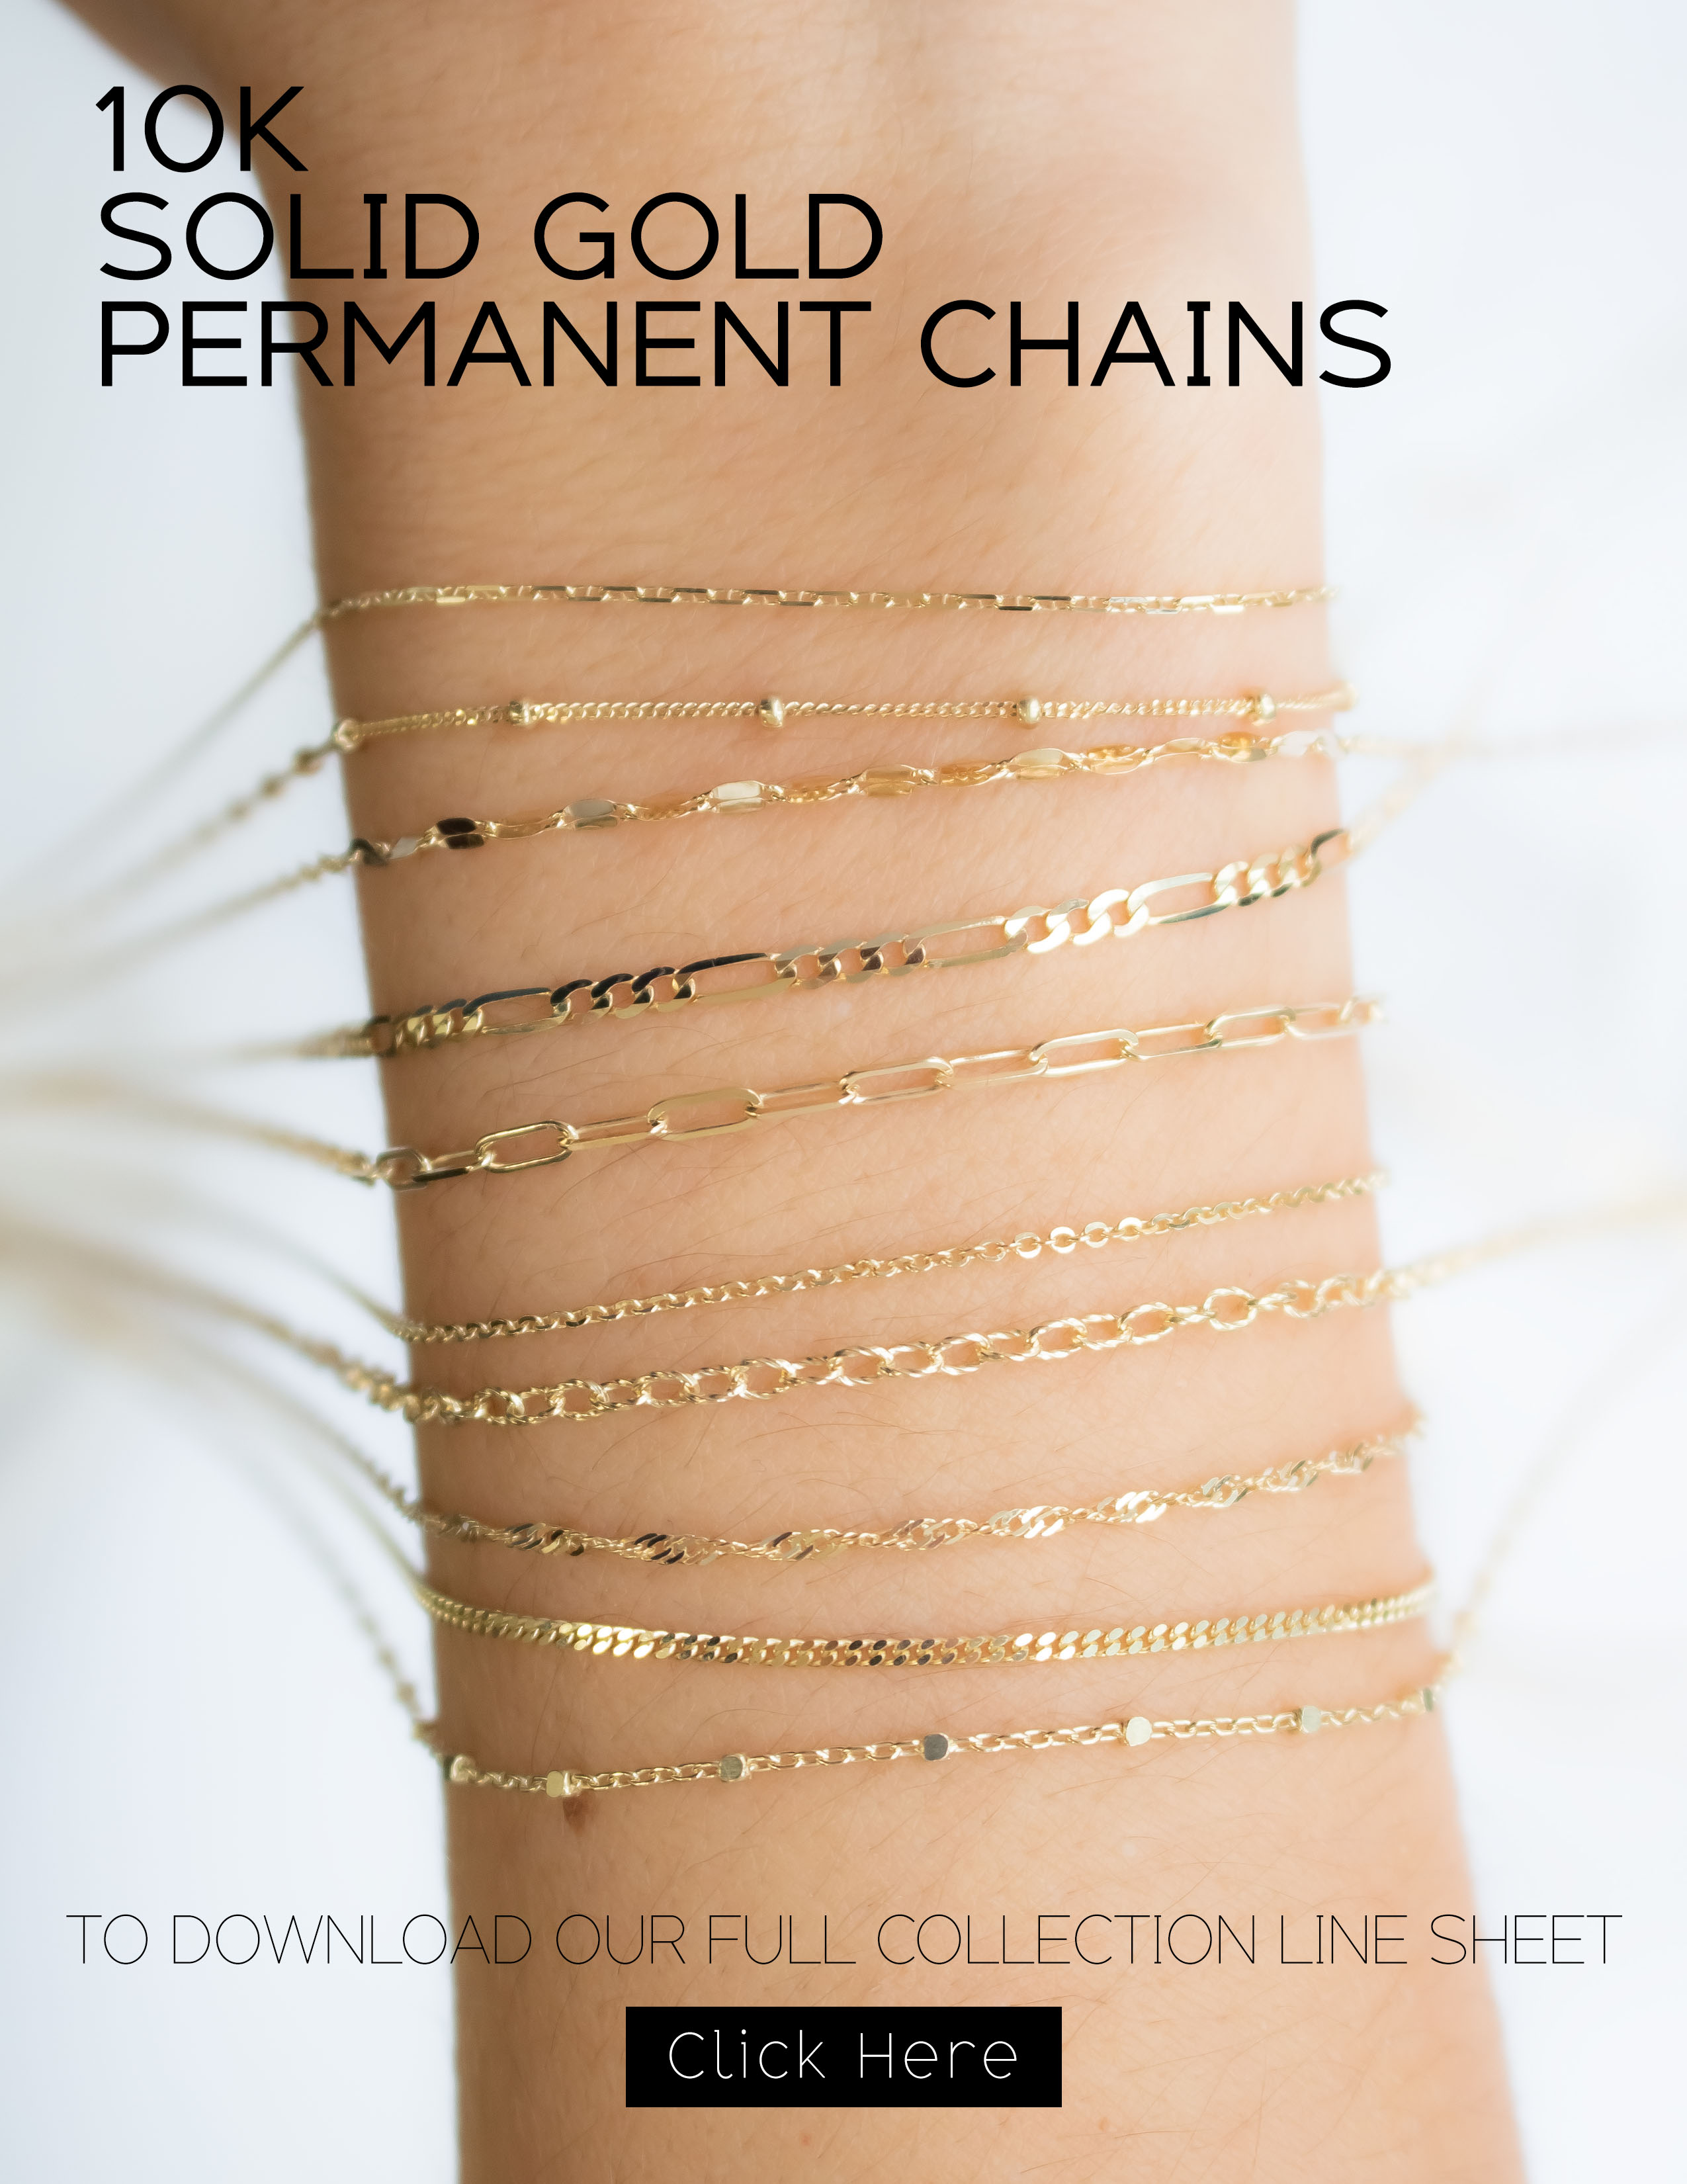 Permanent Chain